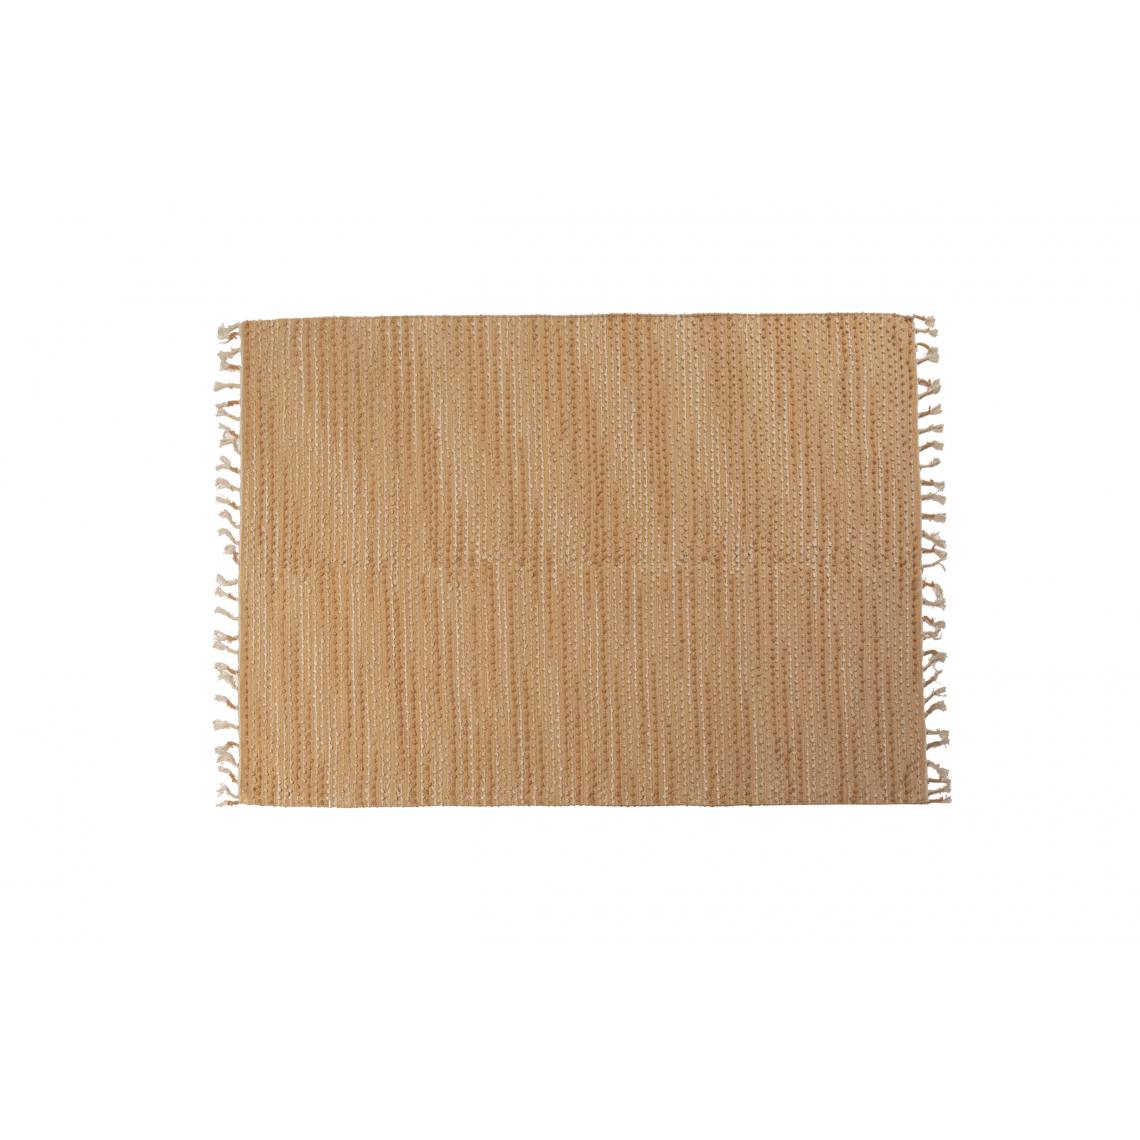 Alter - Tapis moderne Atlanta, style kilim, 100% coton, ivoire, 230x160cm - Tapis